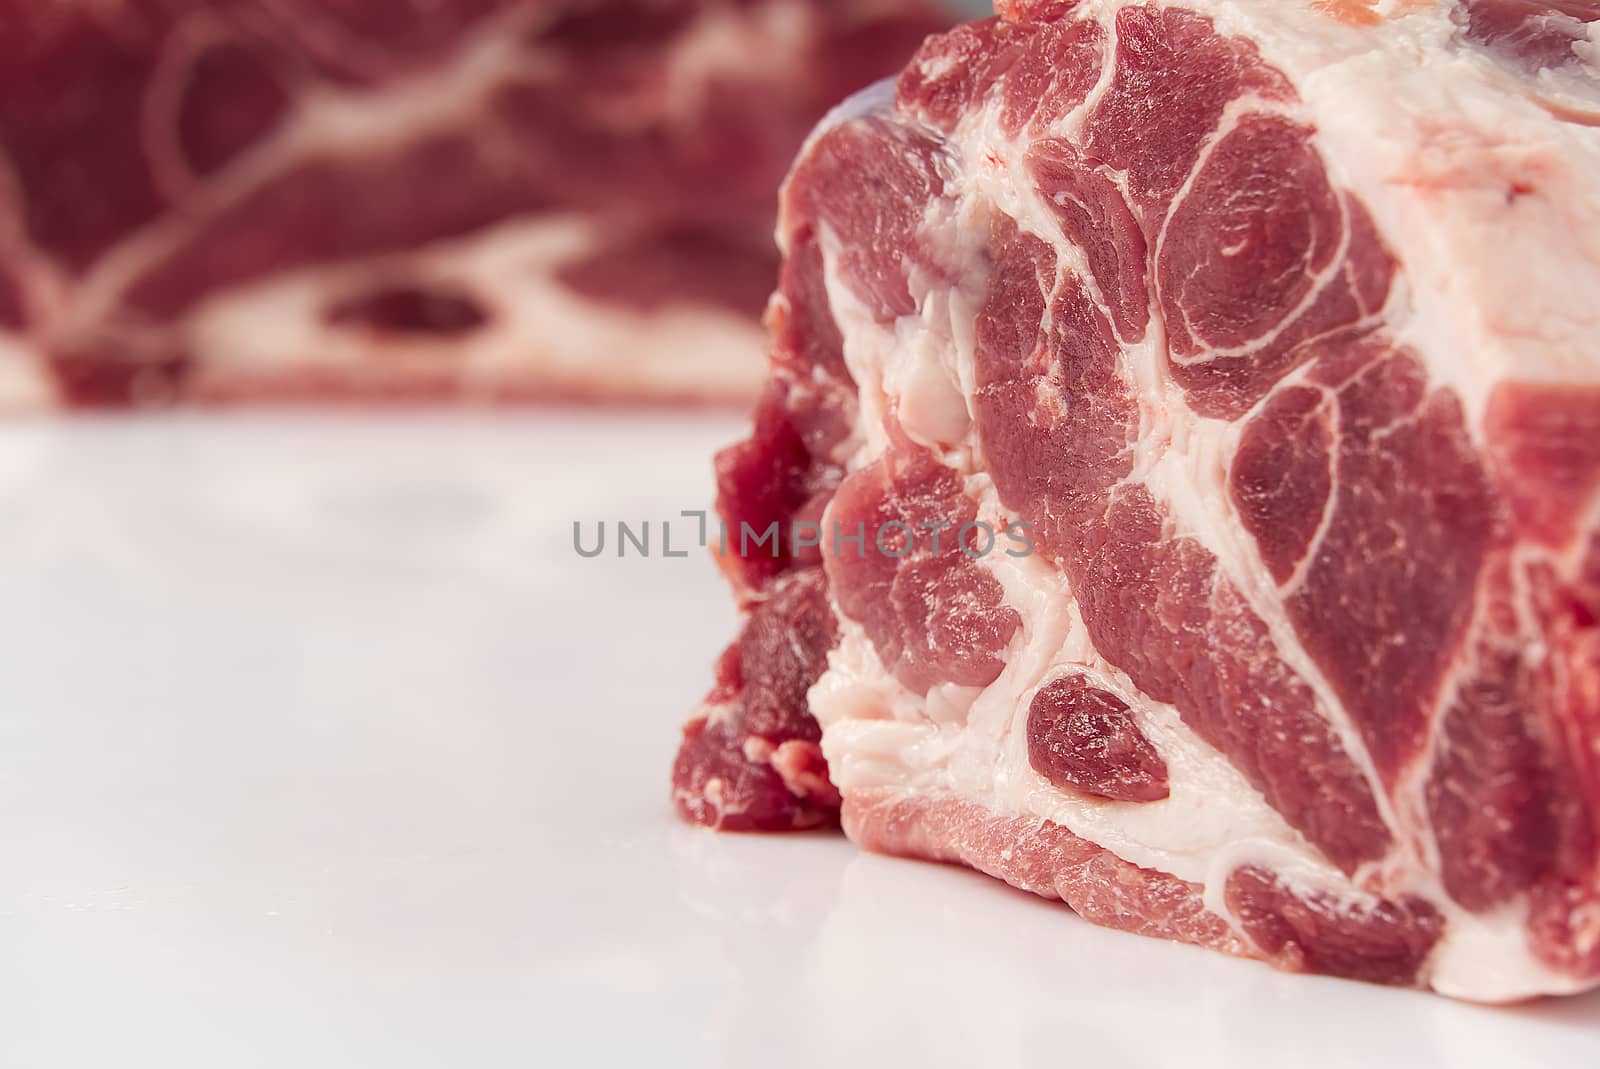 Slice of fresh raw pork meat on white background. by PhotoTime